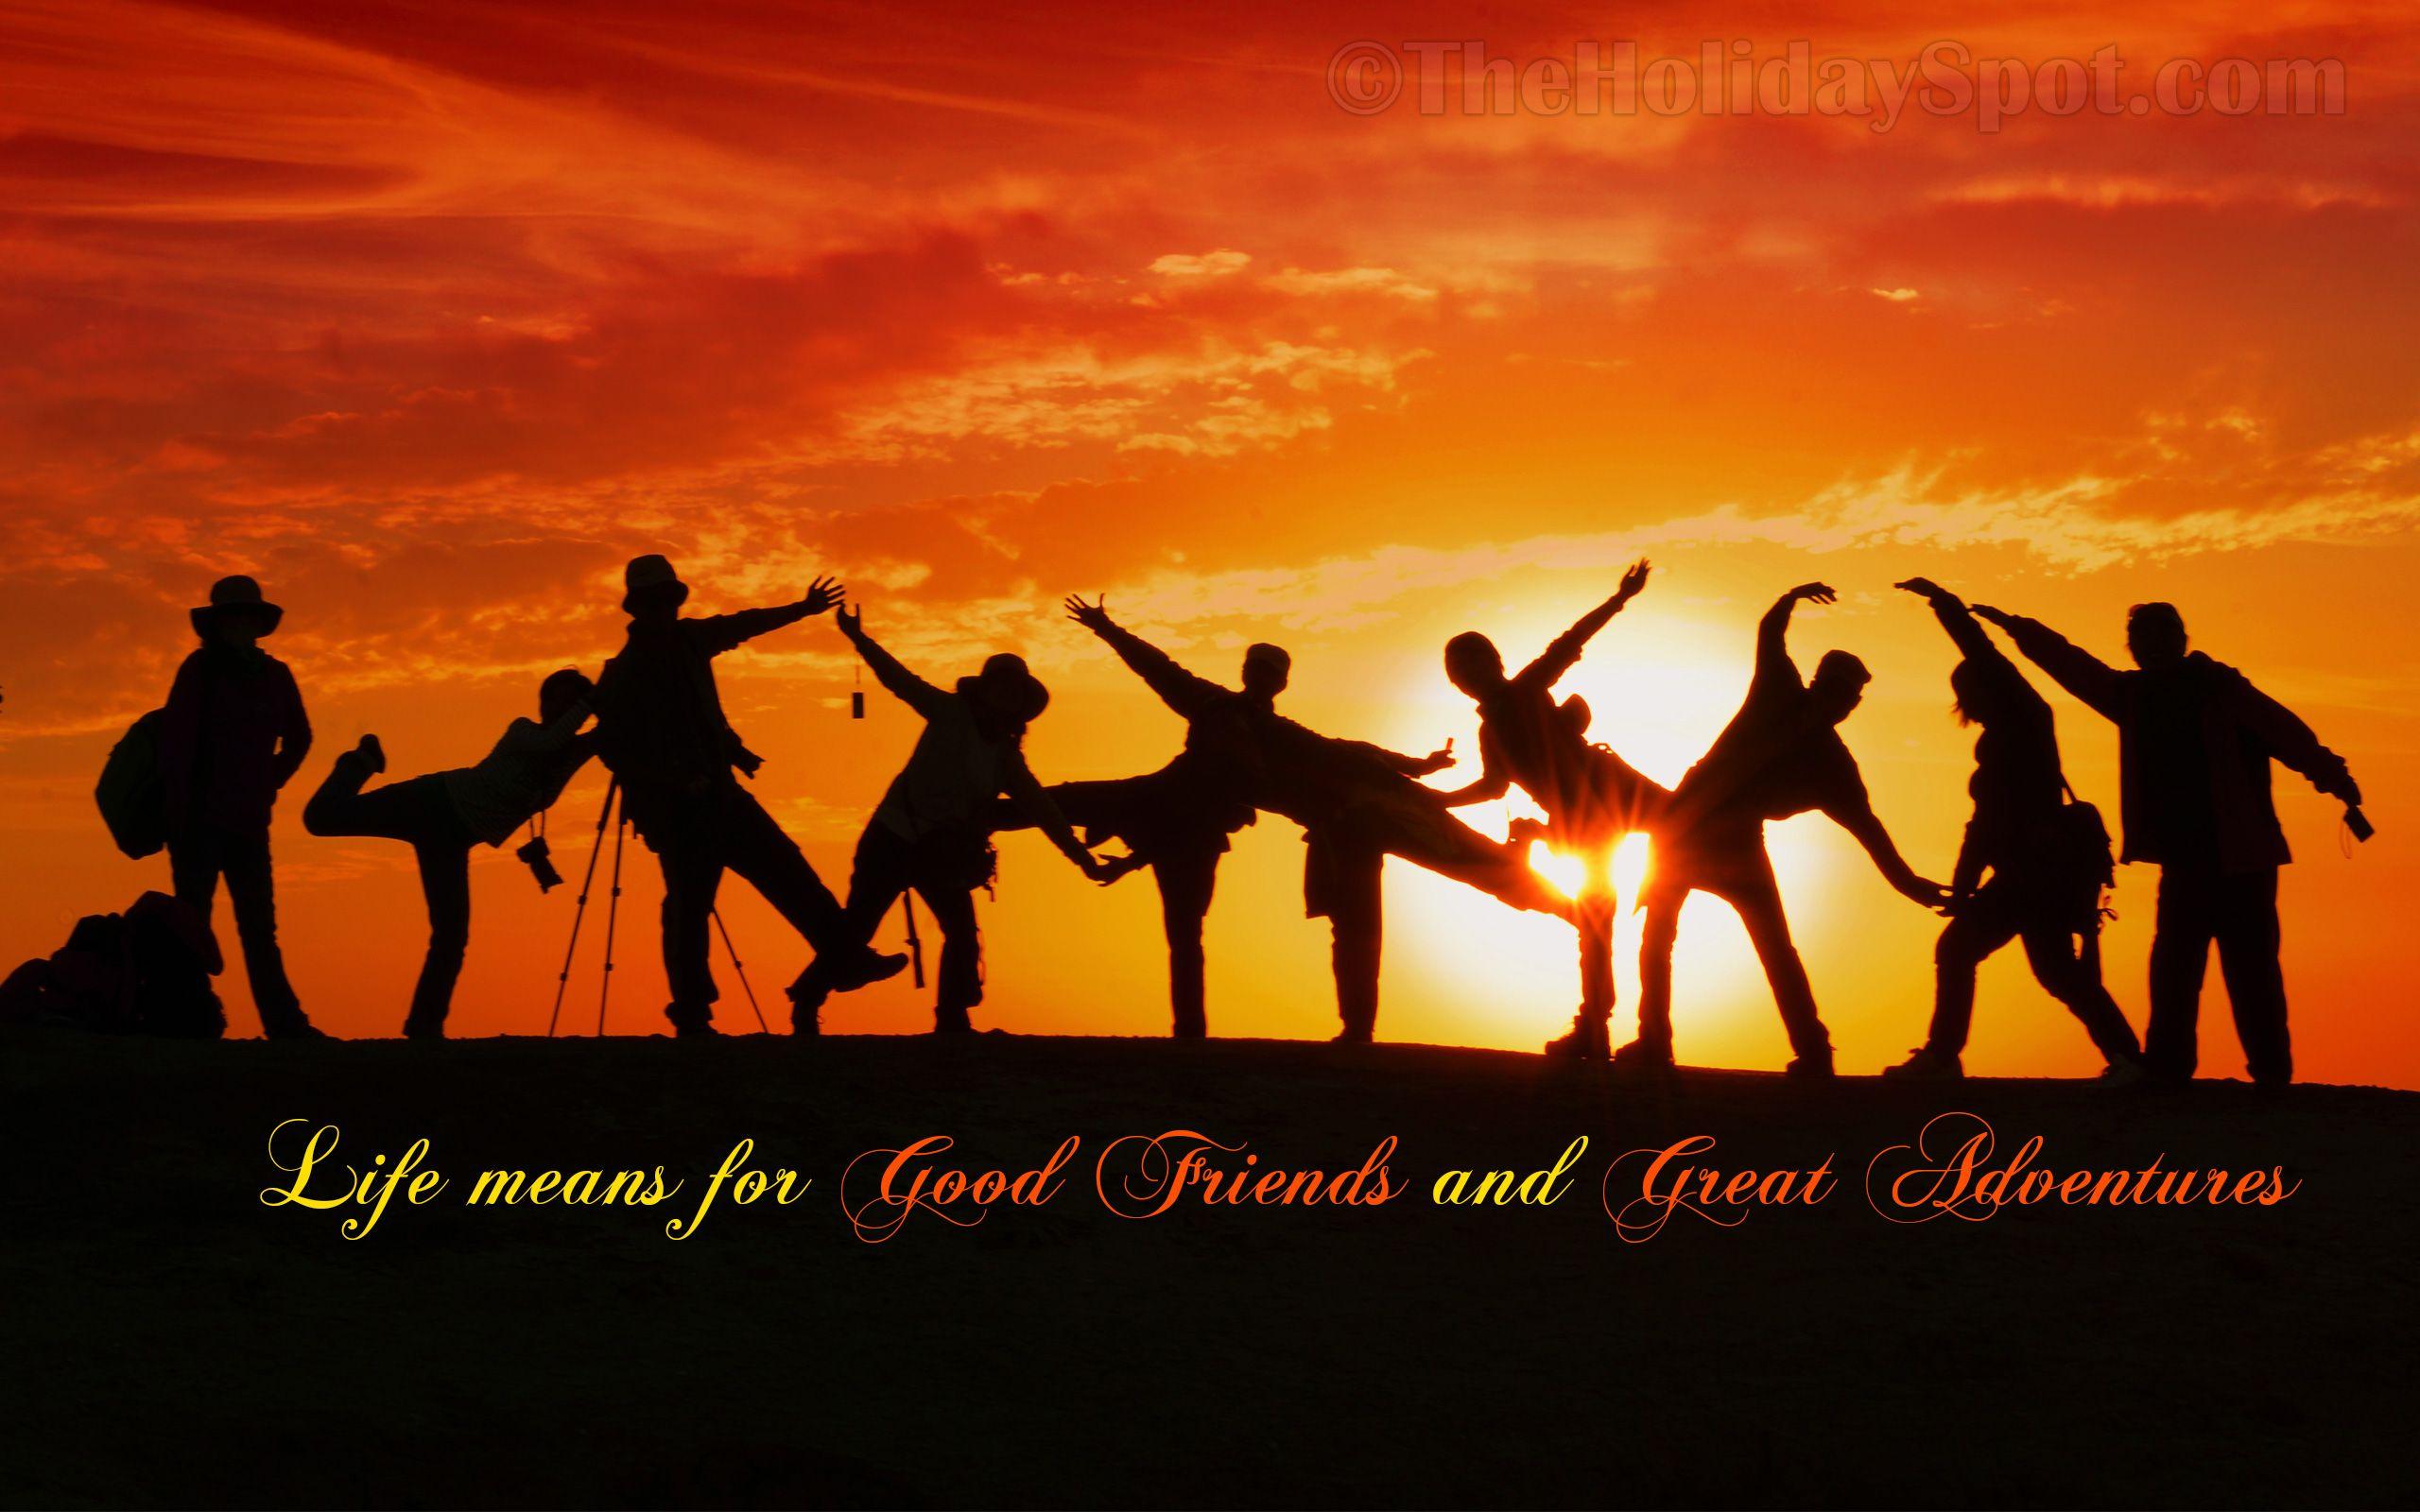 Friendship Day Wallpaper 2020. Friendship Image HD. Download Friendship Day Image